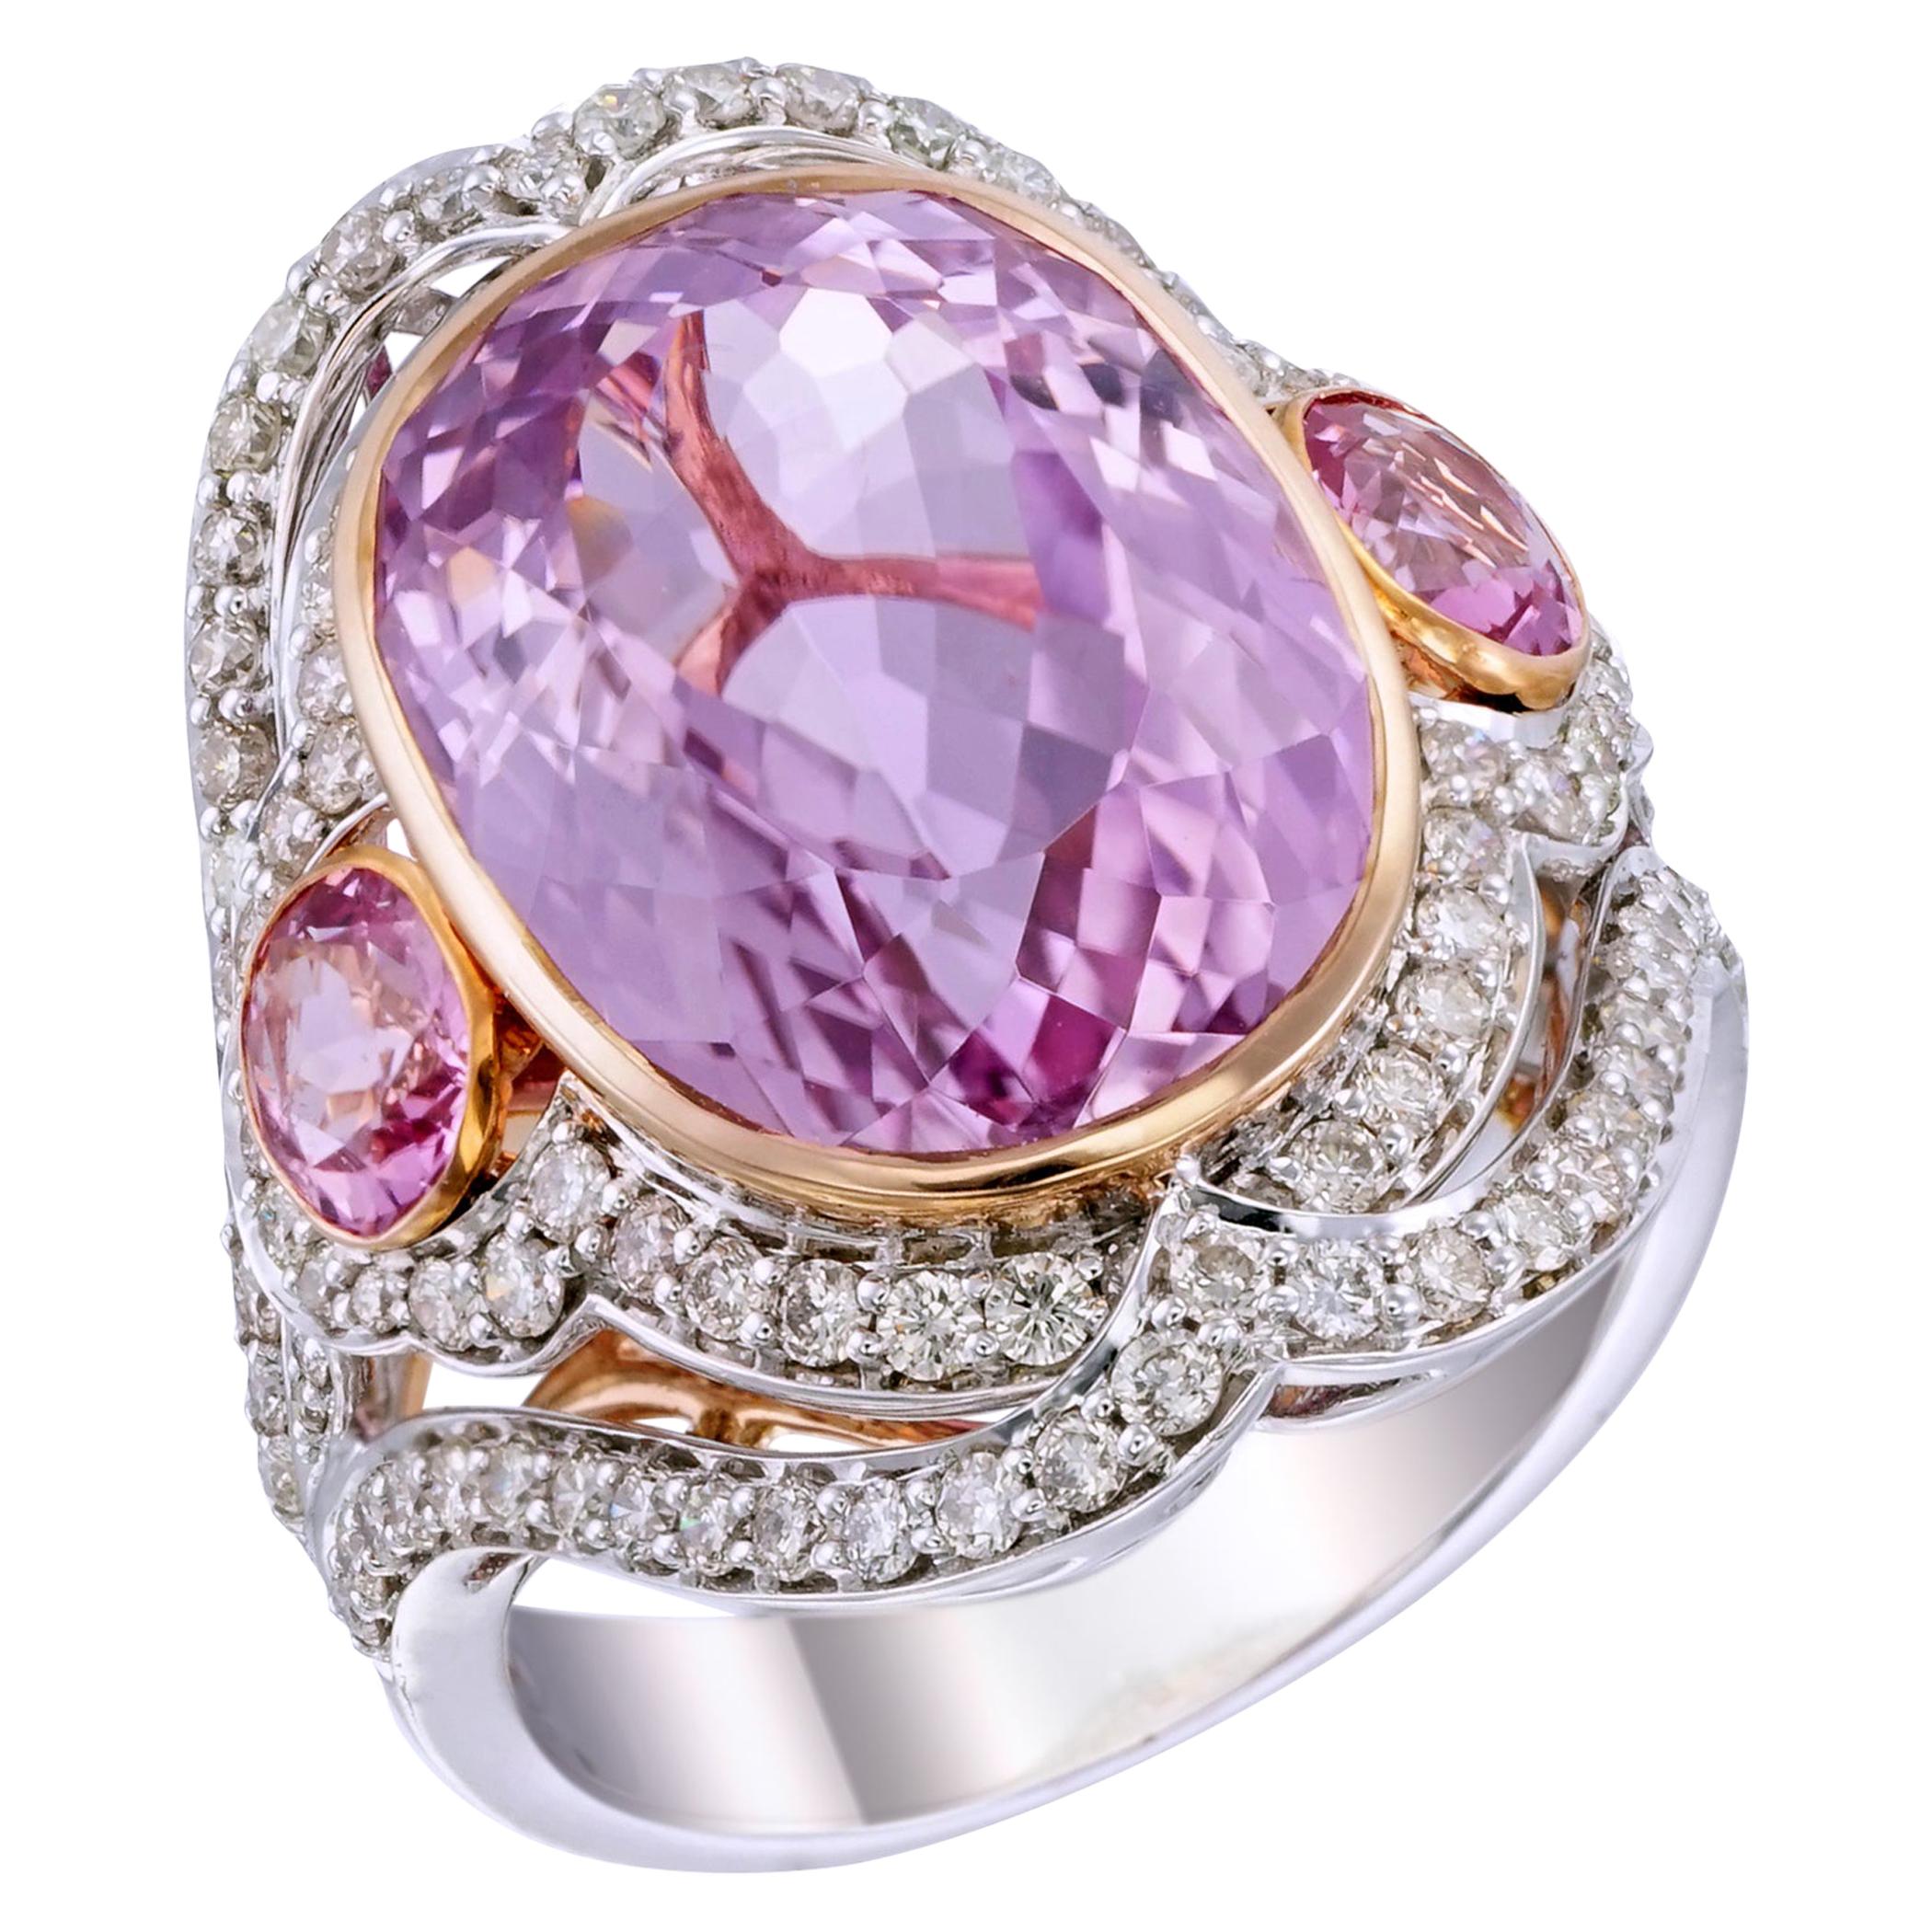 Zorab Creation 14 Carat Pretty in Pink Kunzite Ring